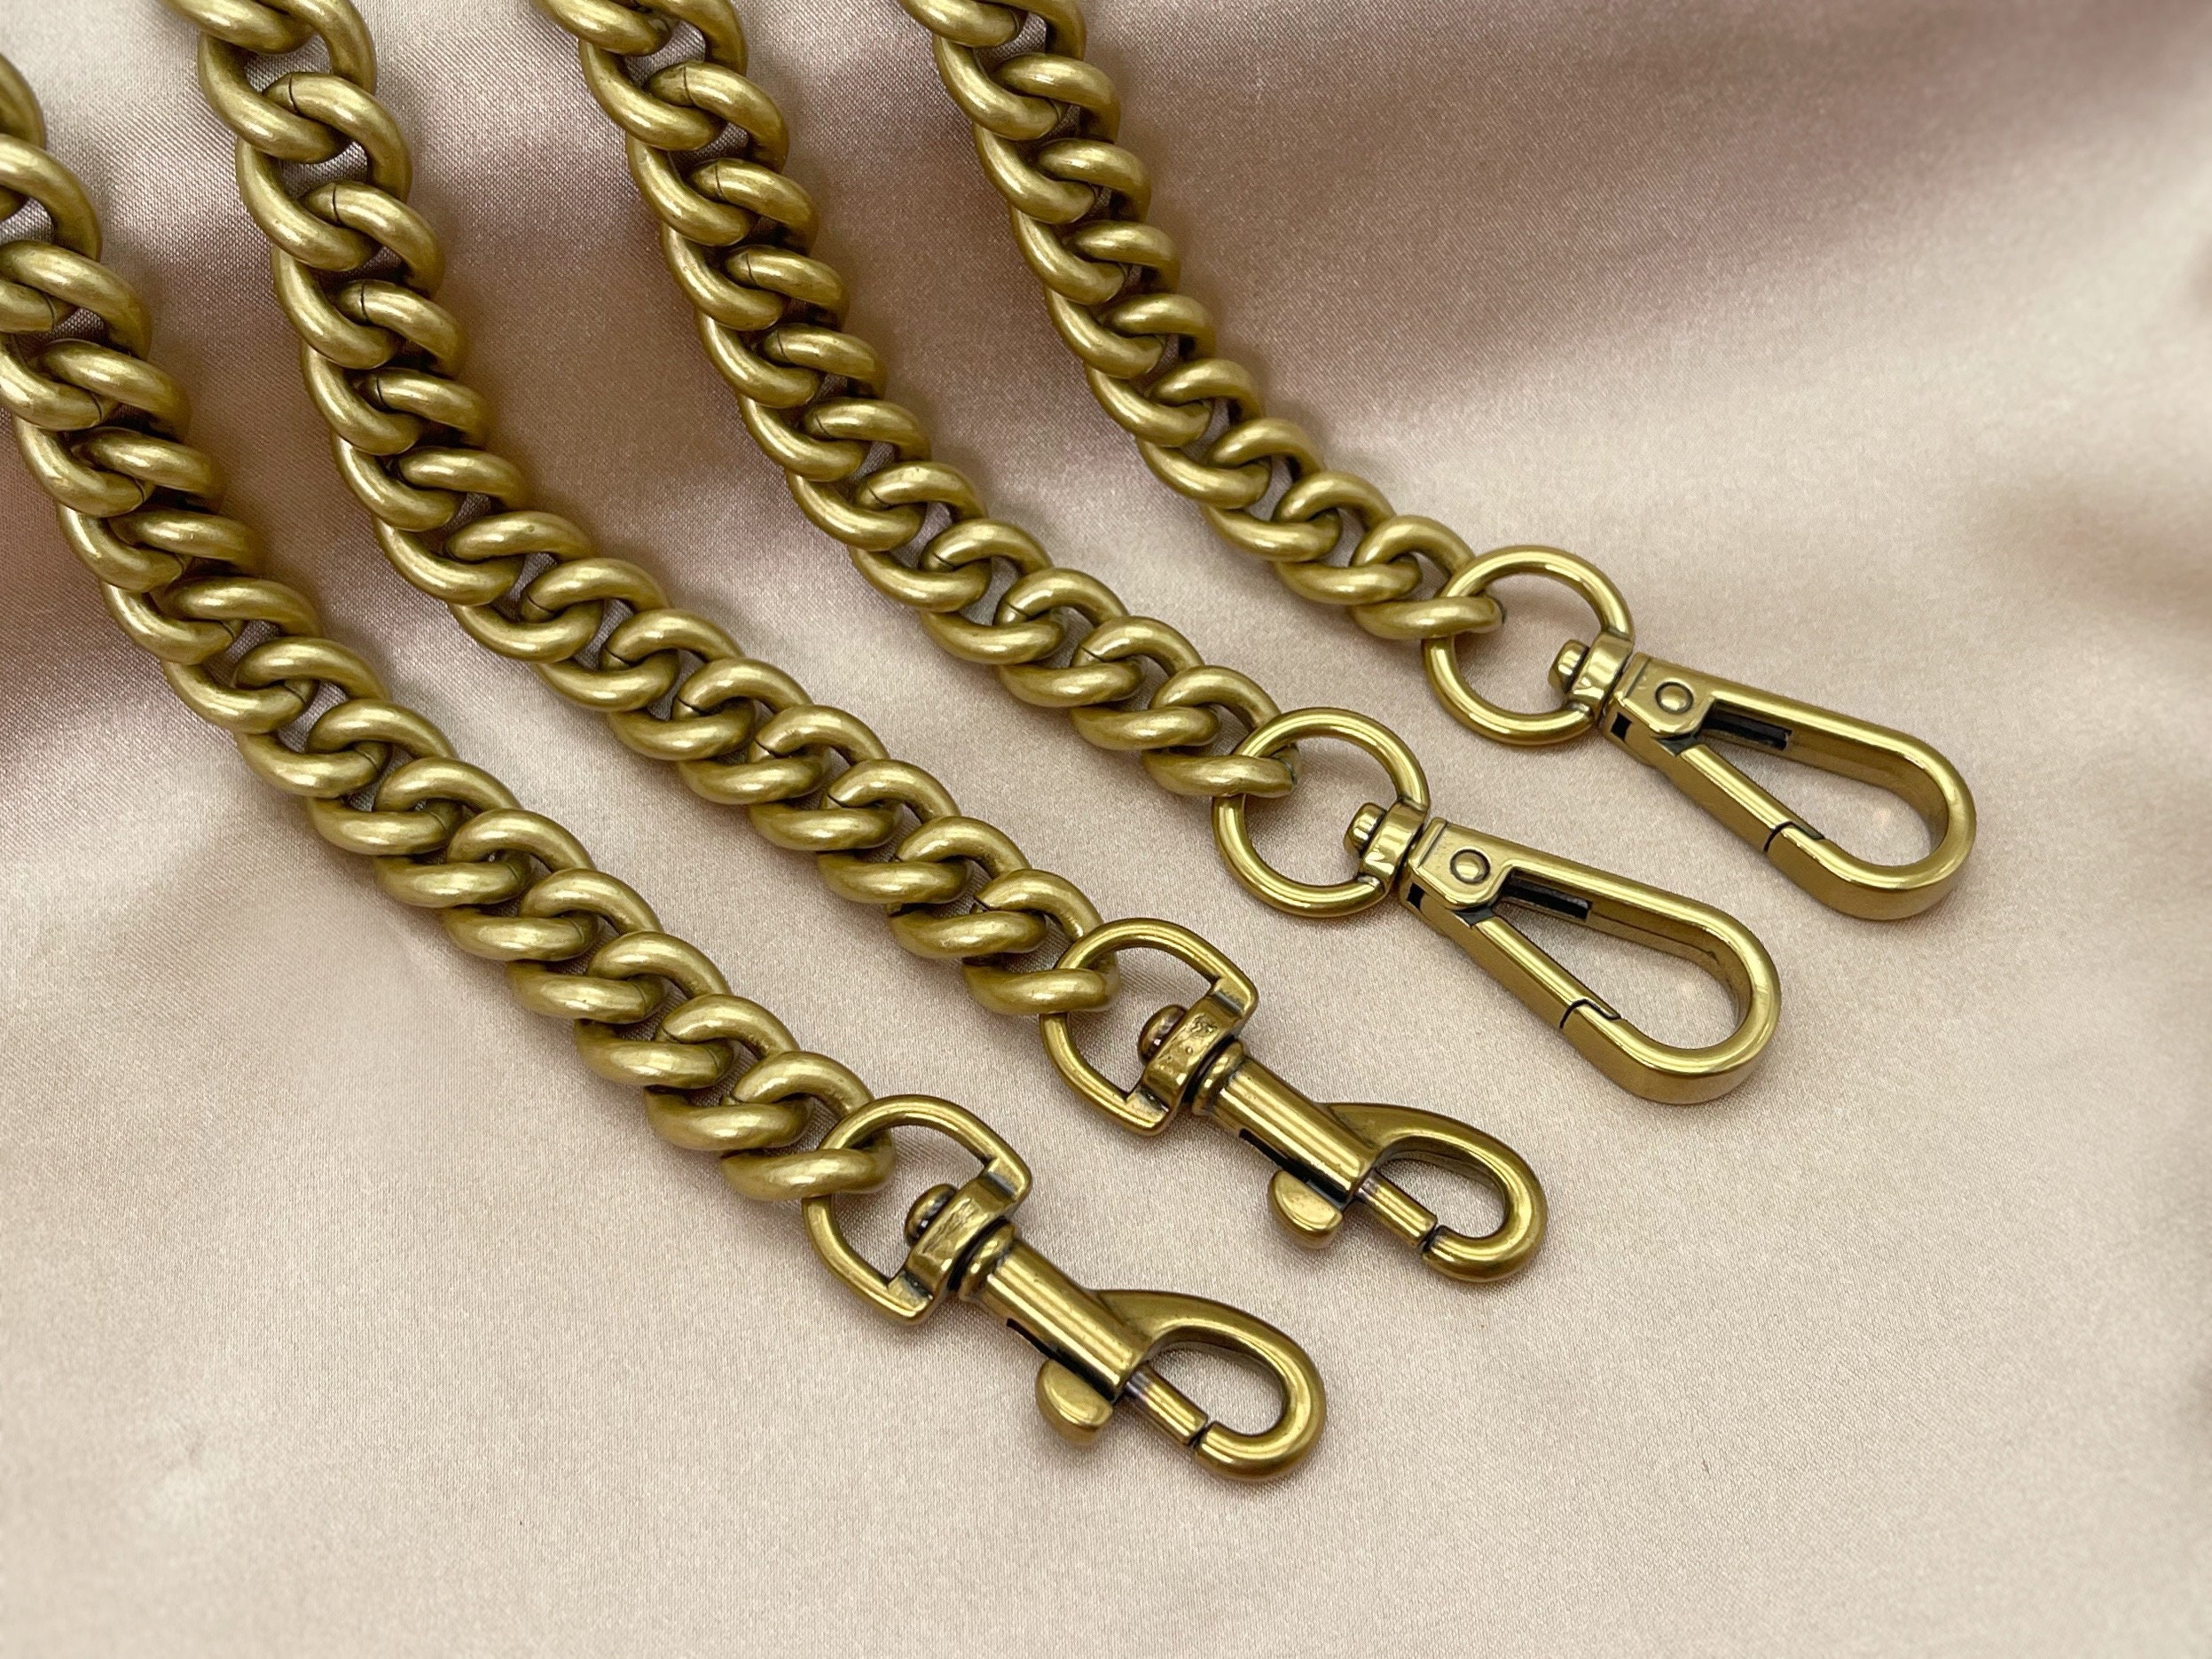 Bronze Doublelife 47 Metal Chain Strap Handbag Chains Accessories Purse Straps Shoulder Cross Body Replacement Straps 